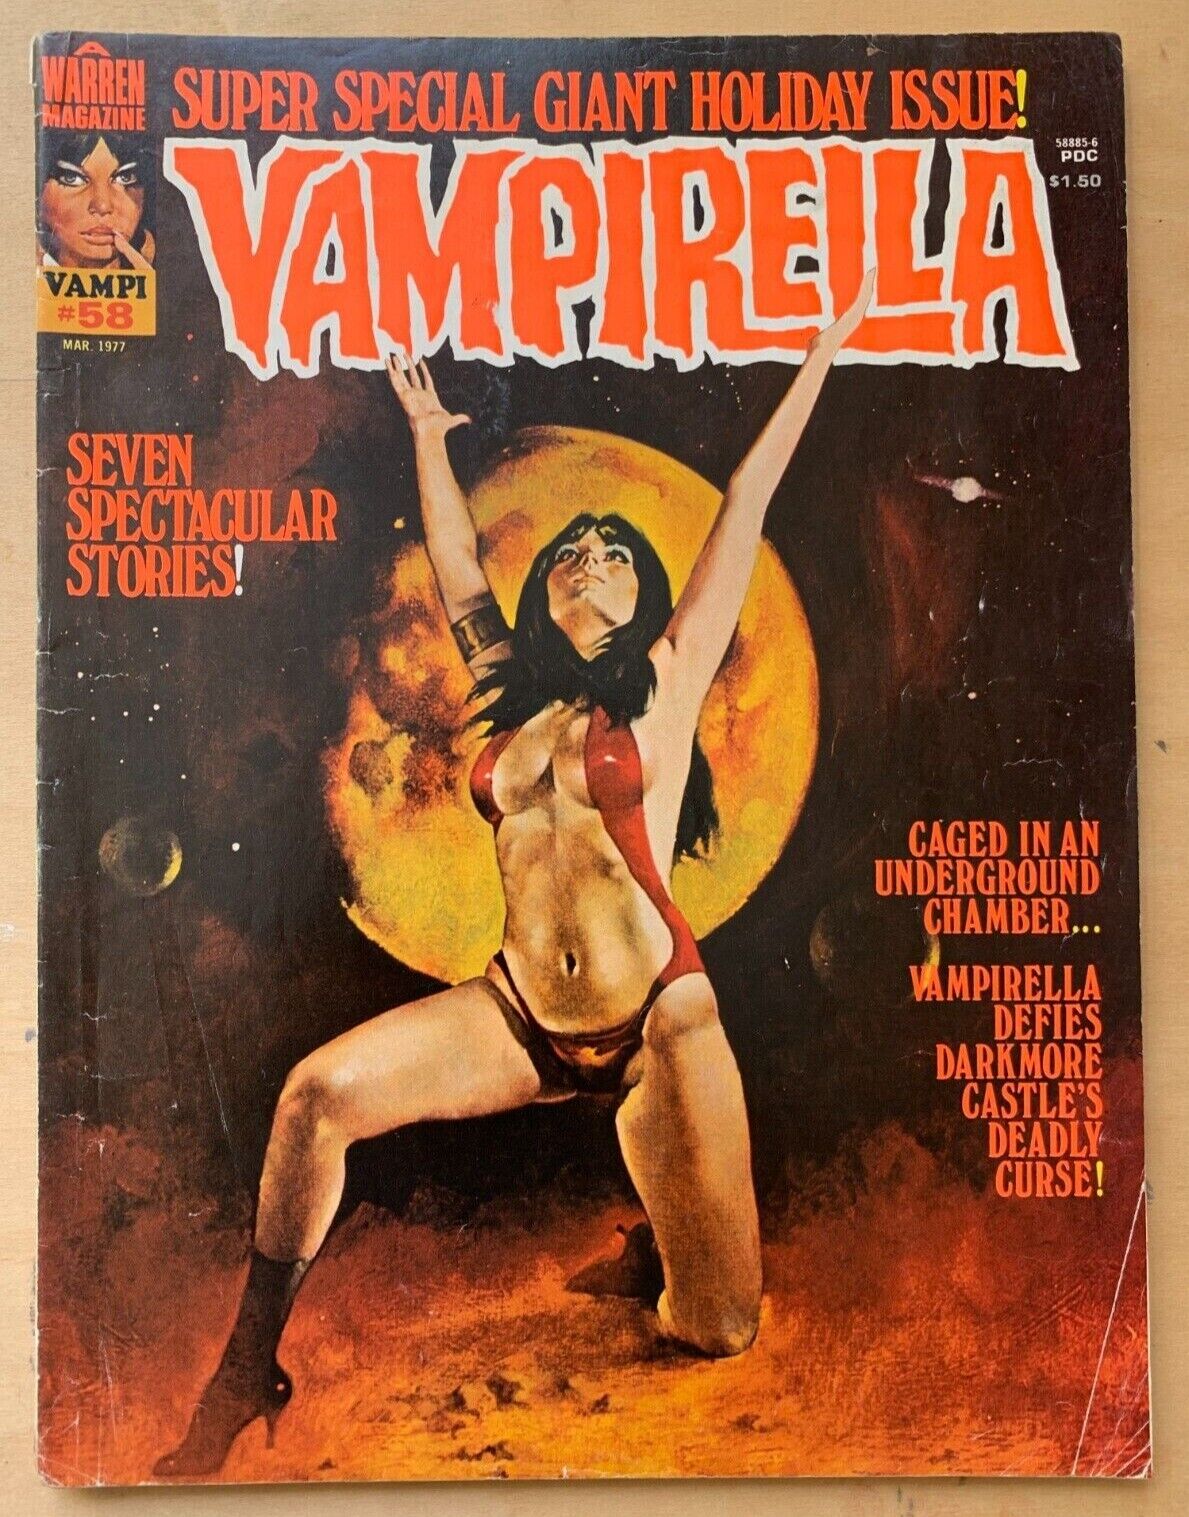 Vampirella Warren Lot of 10 within #47-82. Dates within 1975-79. G/3.0 - VG/4.0.